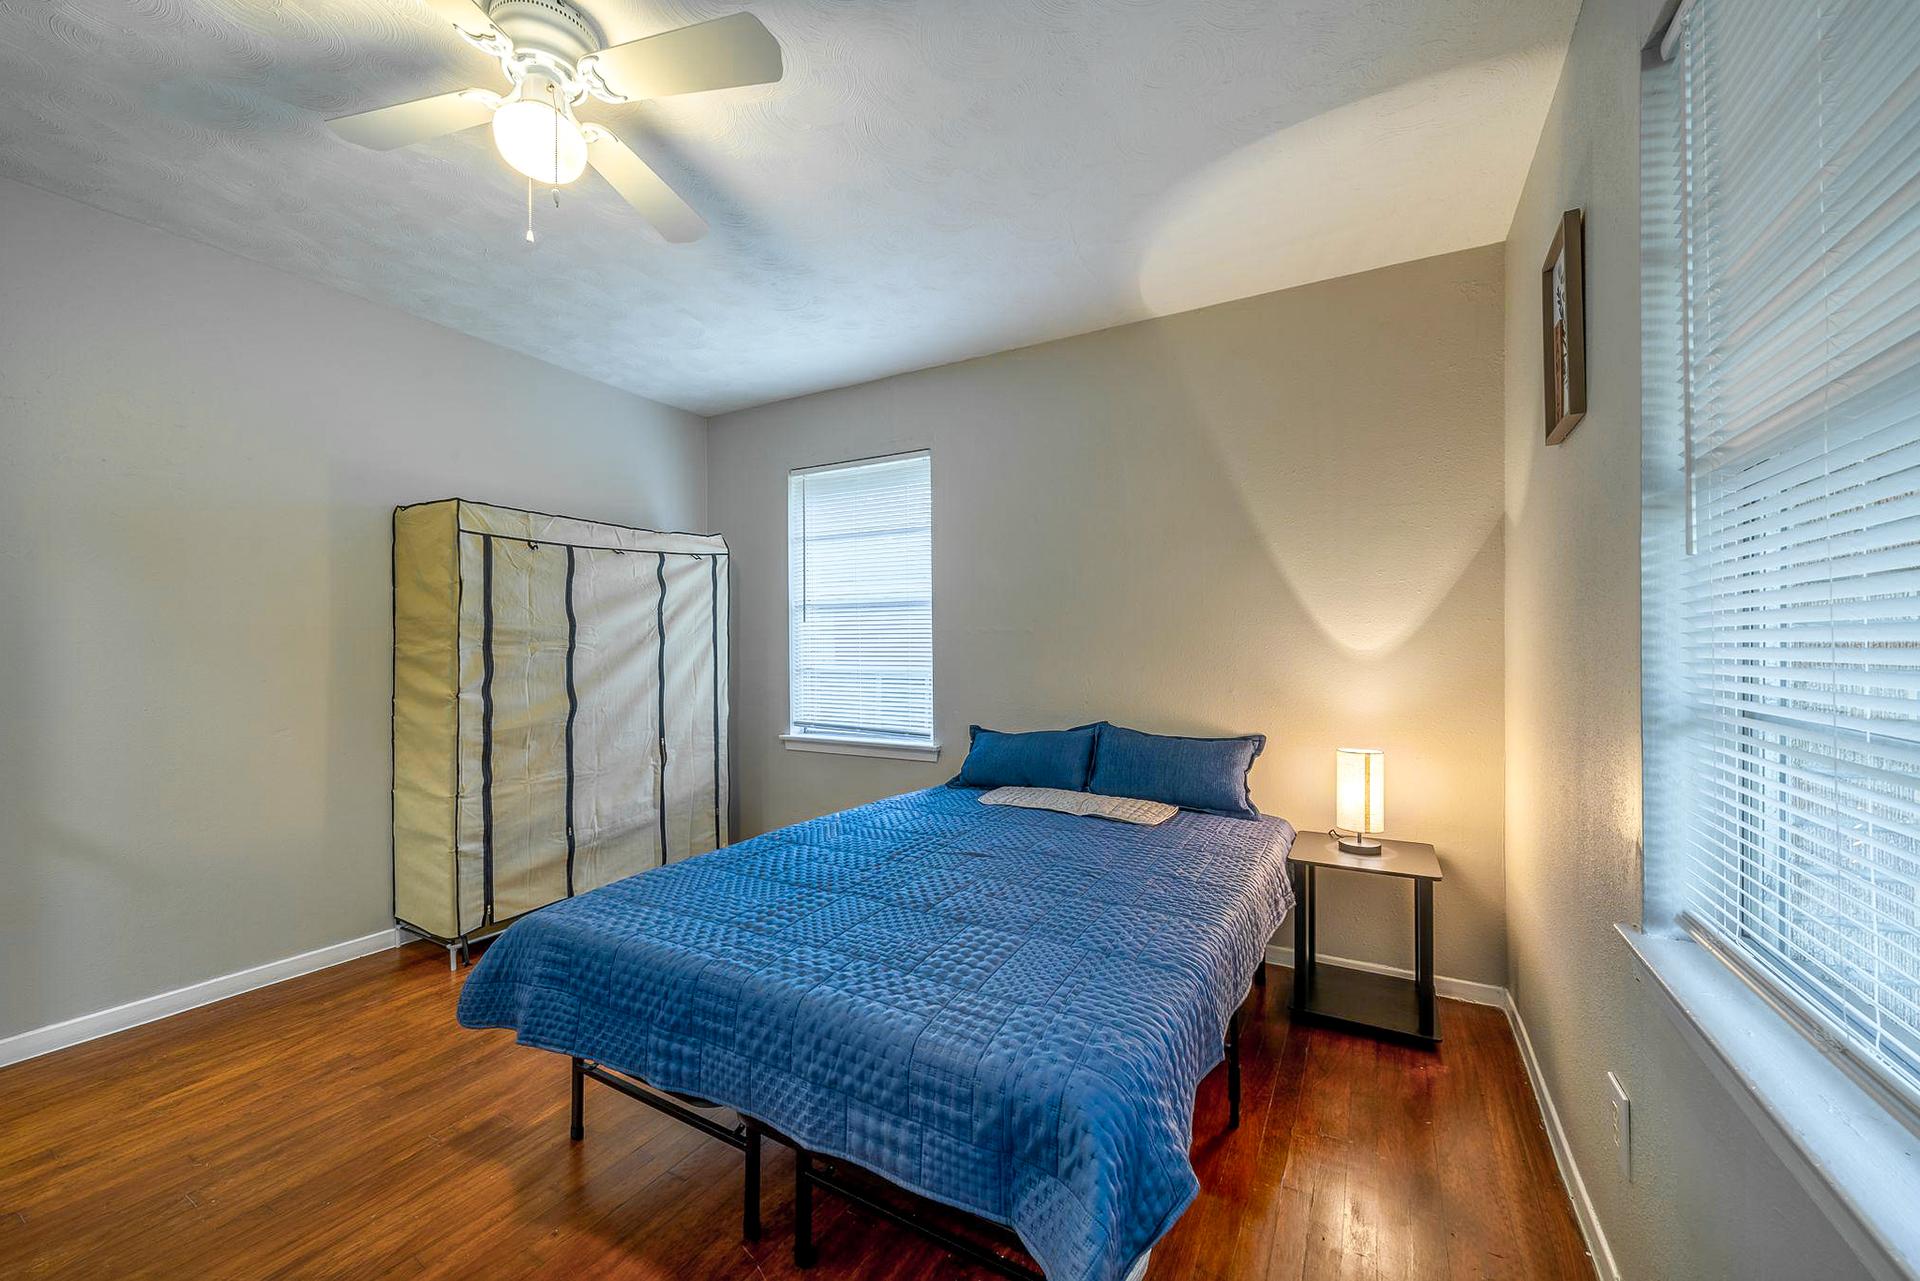 bedroom, detected: window blind, ceiling fan, bed